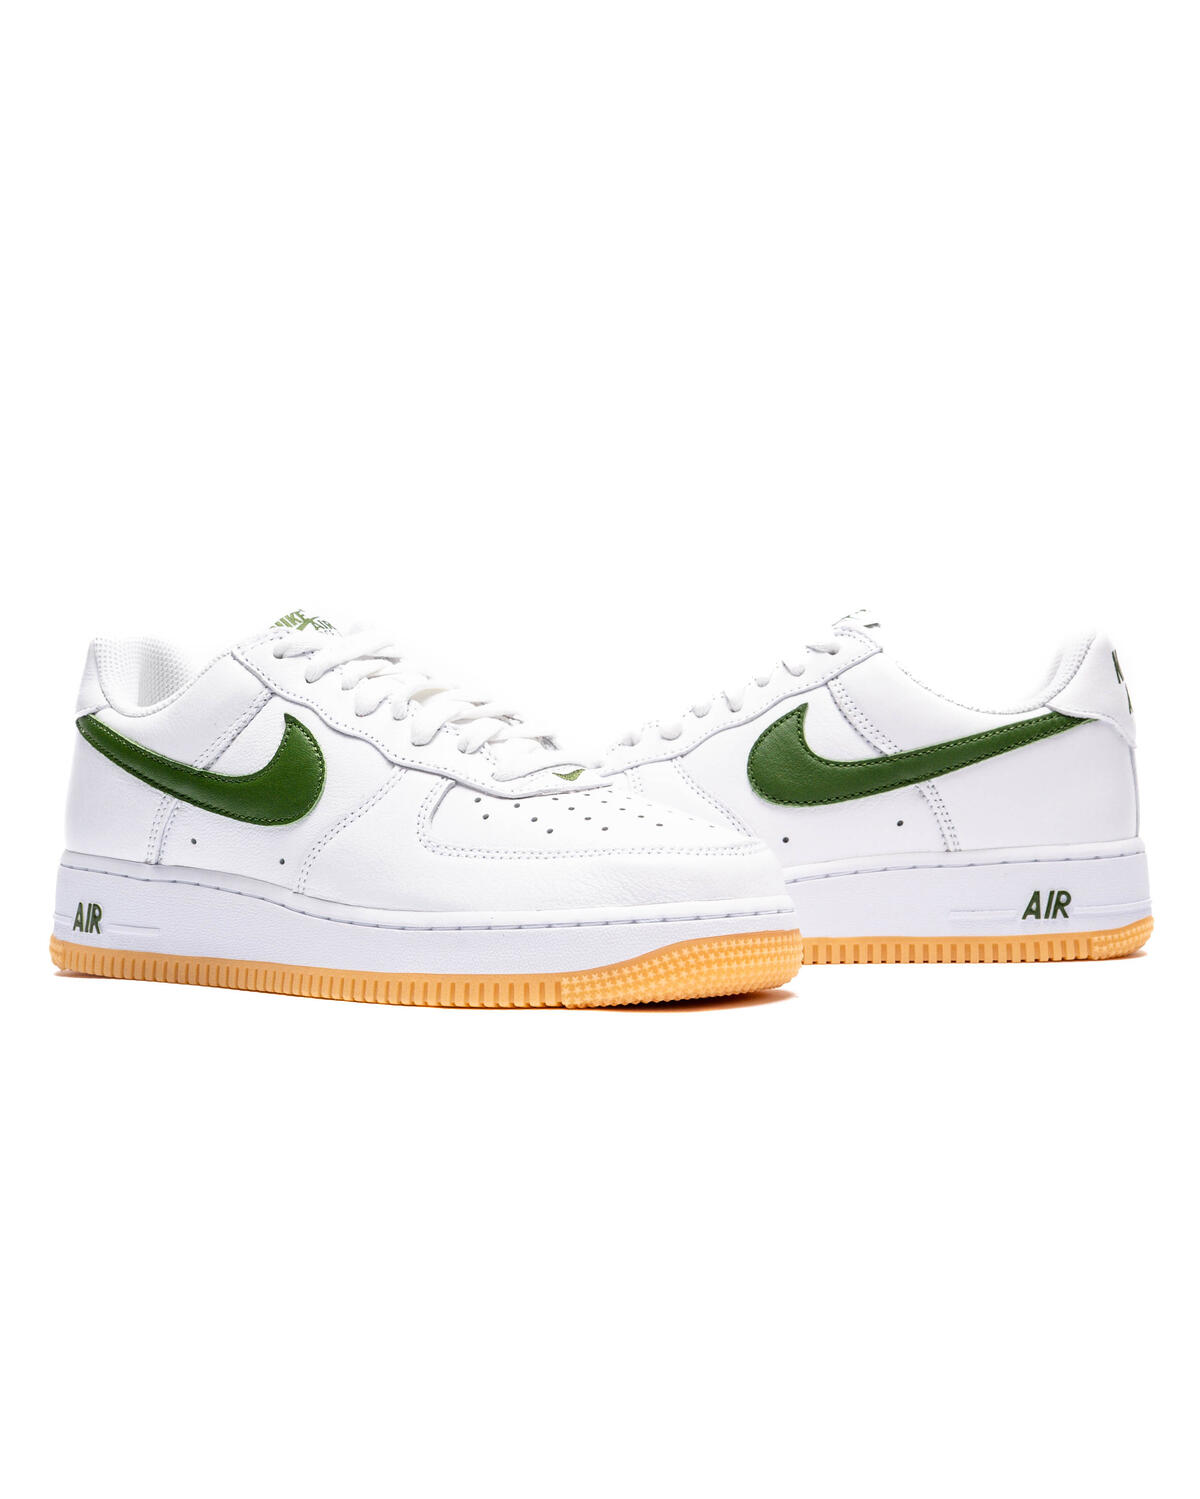 Nike Air Force 1 Low Retro QS White/Green/Yellow